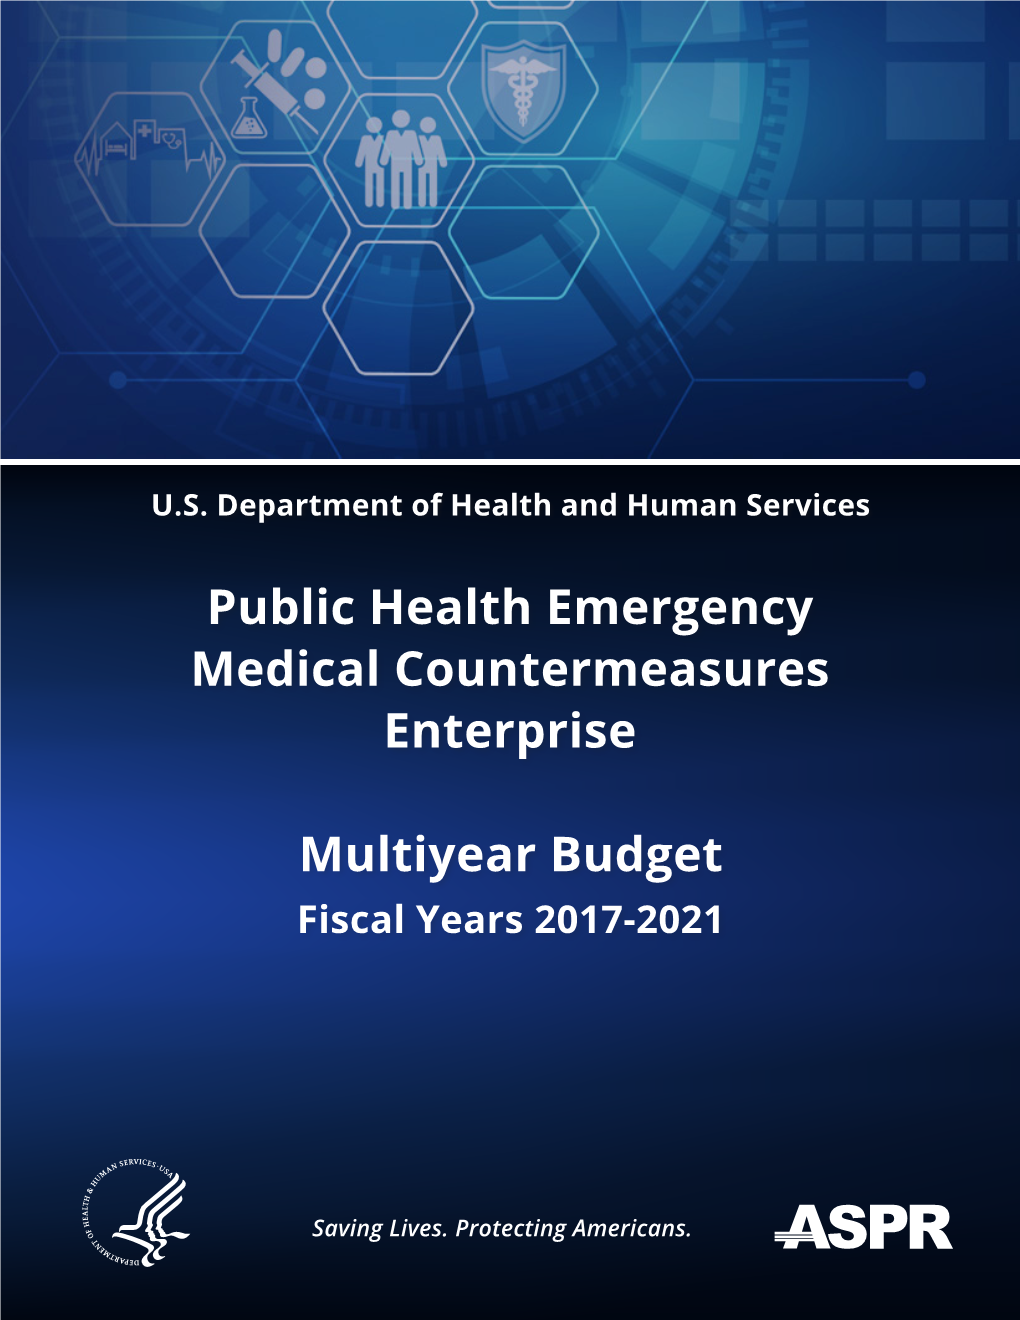 Public Health Emergency Medical Countermeasures Enterprise: Multiyear Budget FY 2017-2021